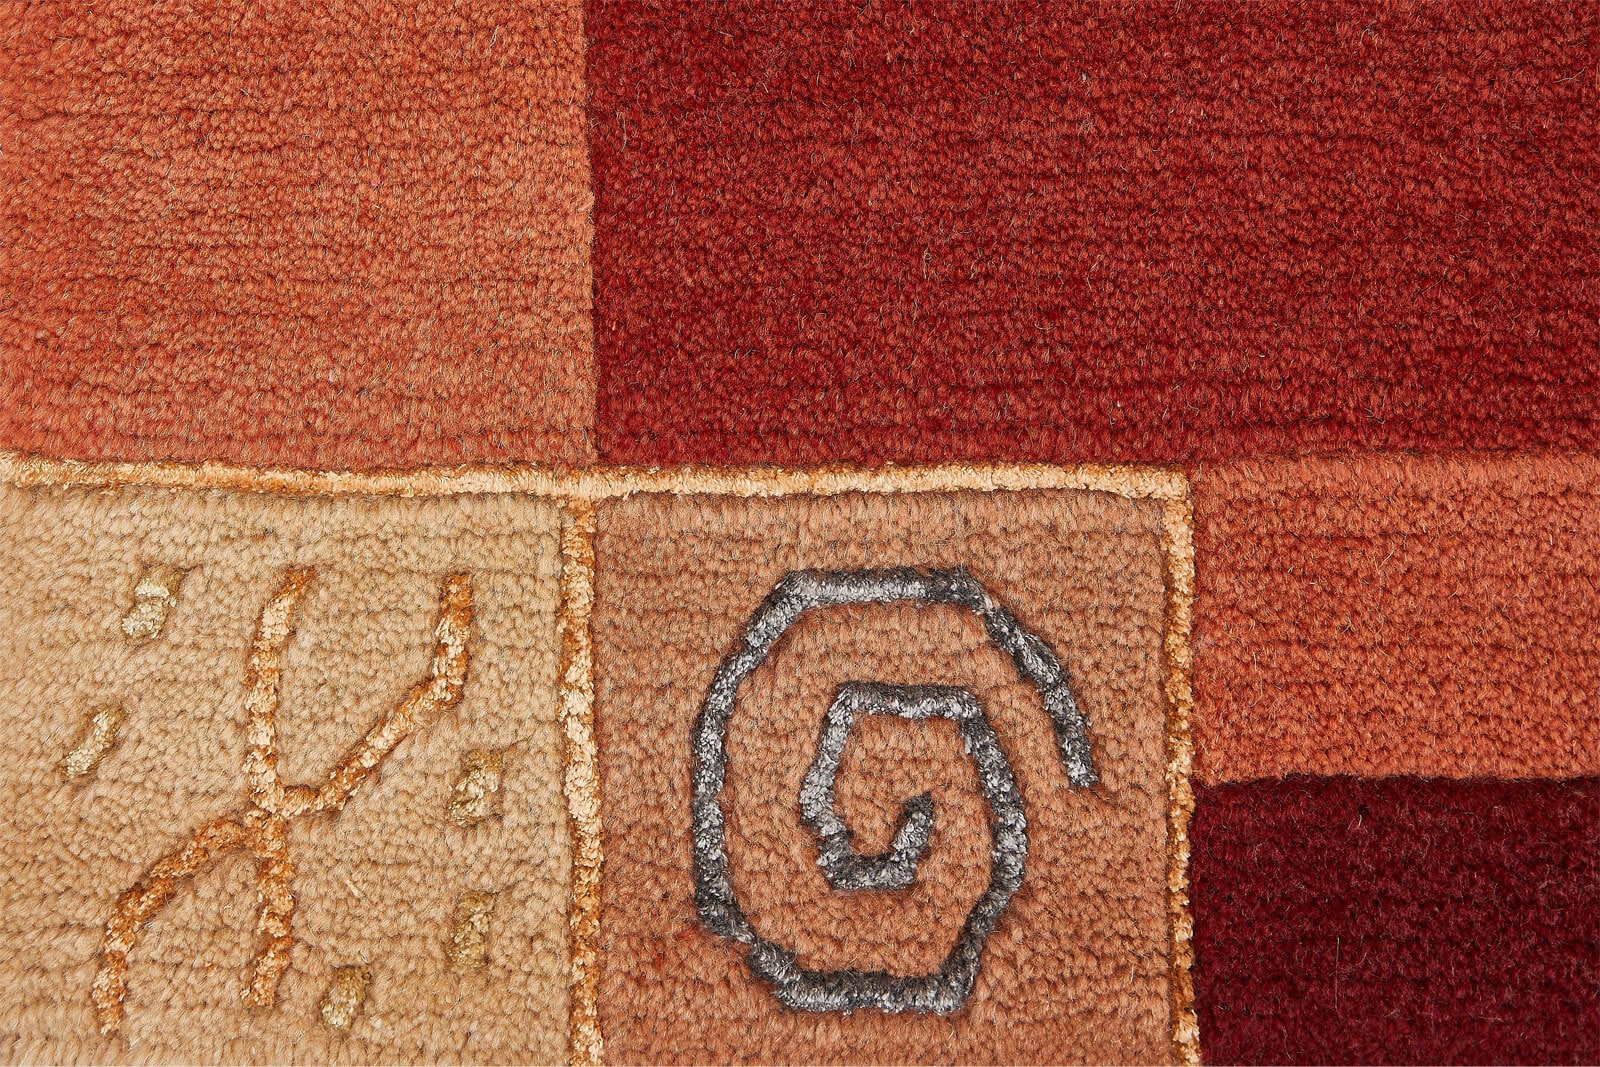 Teppich MANALI 60 x 90 cm rot